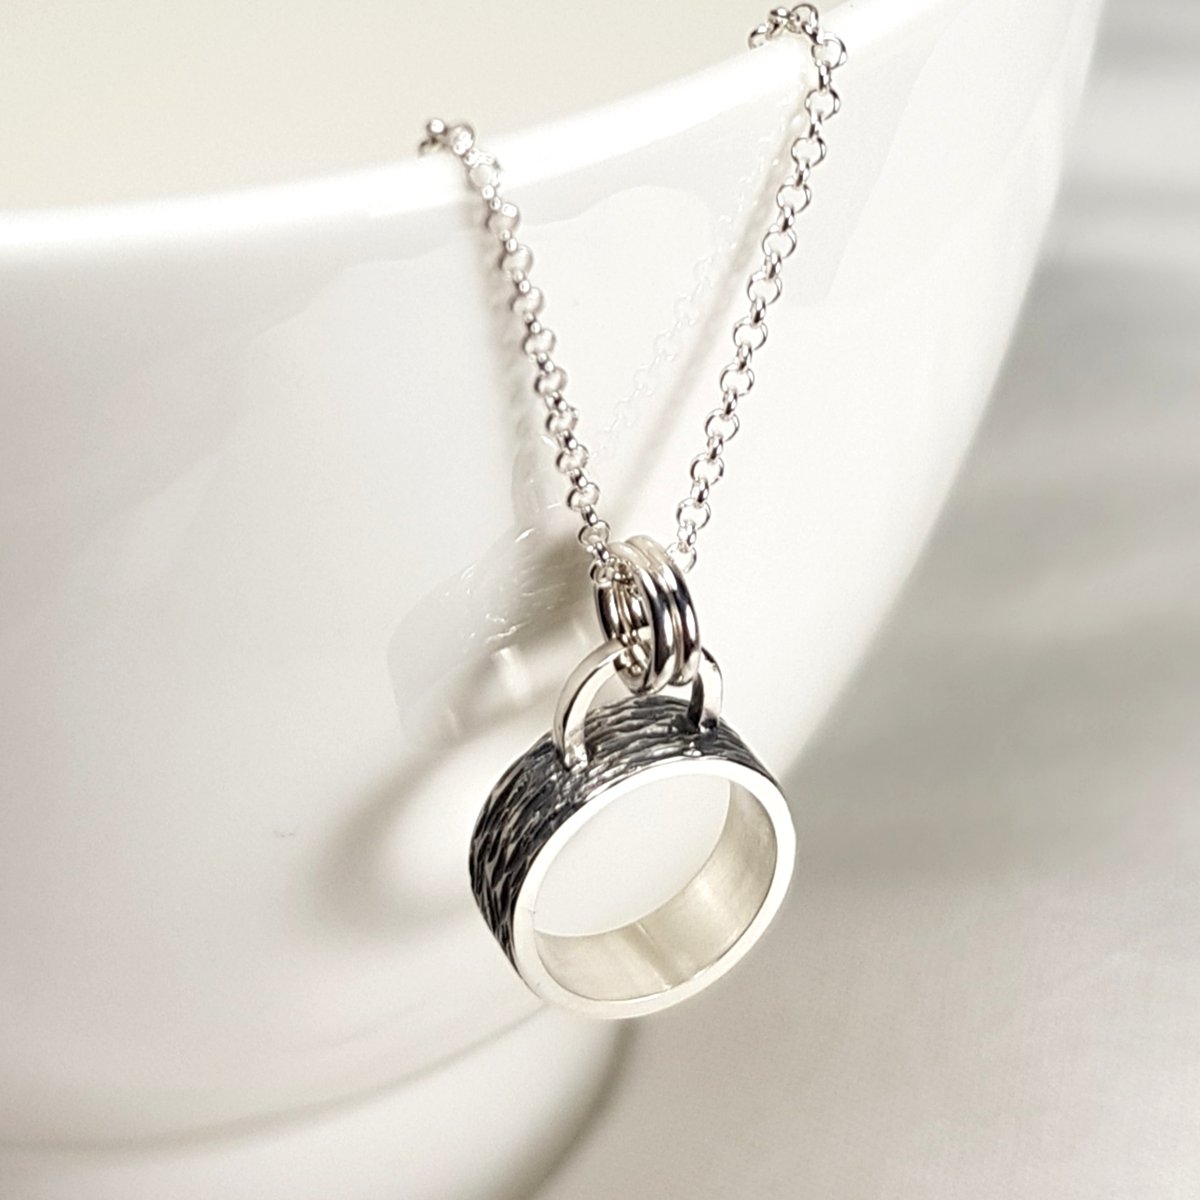 Image of Minimalist Silver Necklace, Handmade Sterling Silver Circle Pendant, Oxidised Pendant